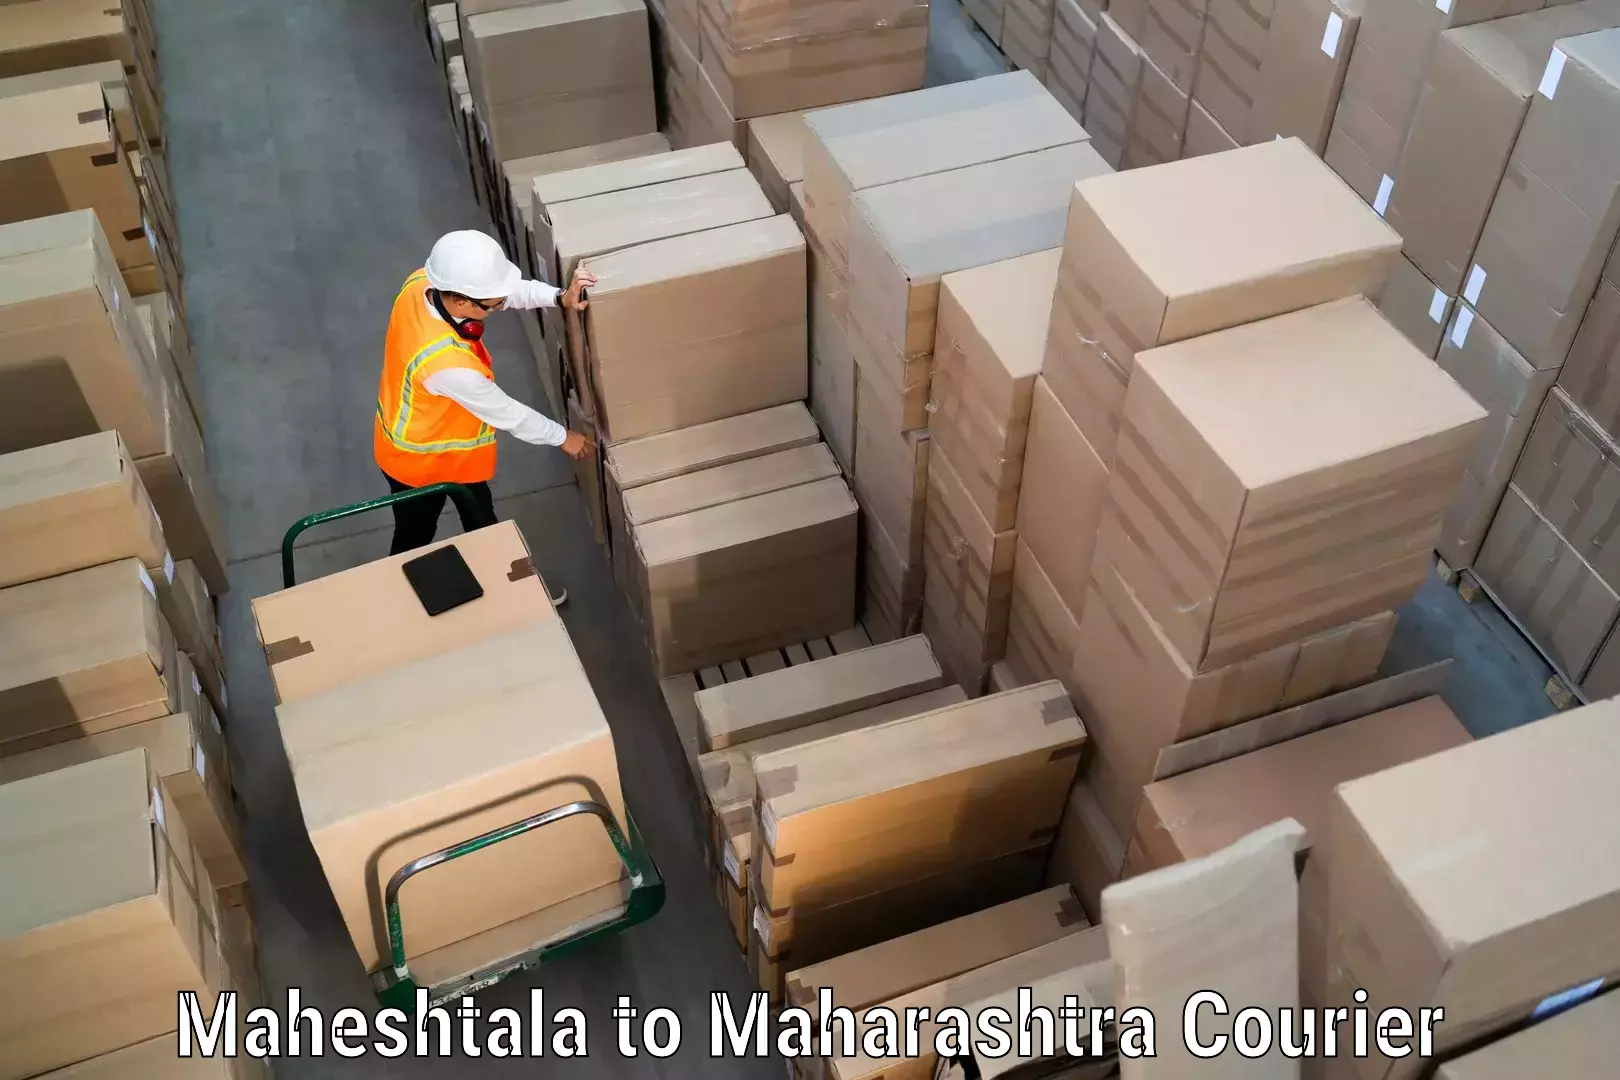 Courier service comparison Maheshtala to Soegaon